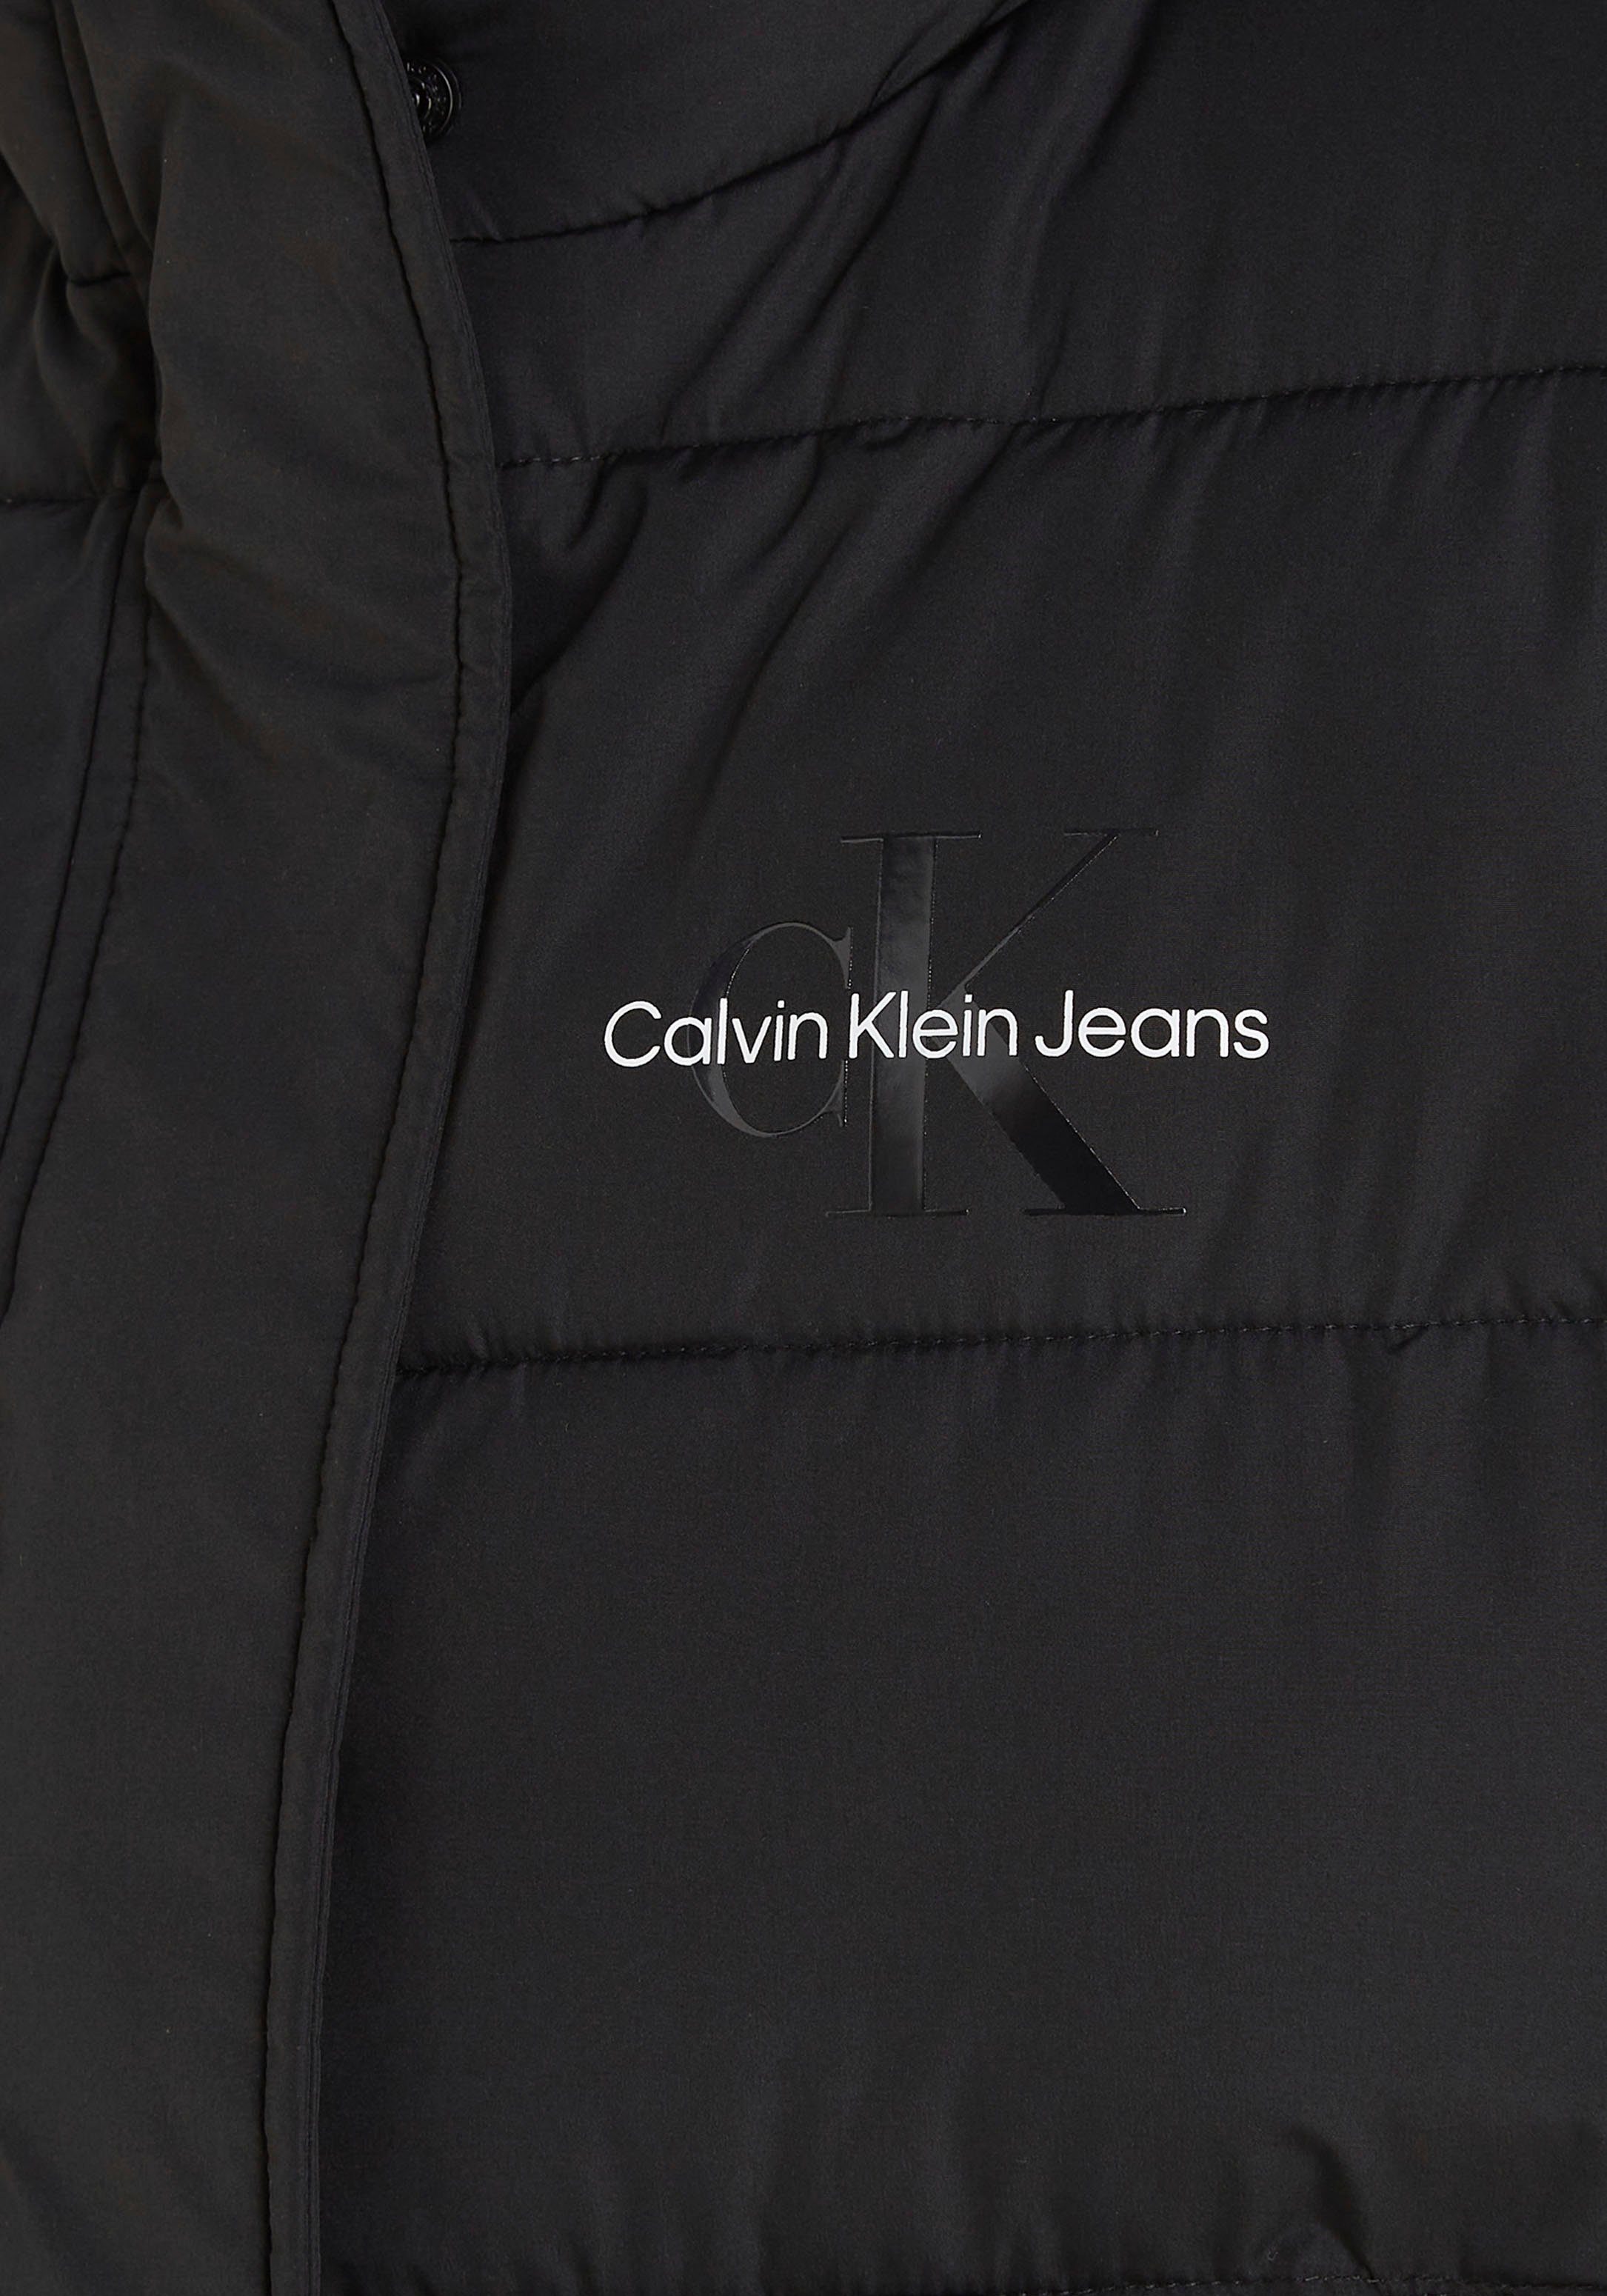 MW Steppweste Klein VEST Jeans Calvin NON-DOWN